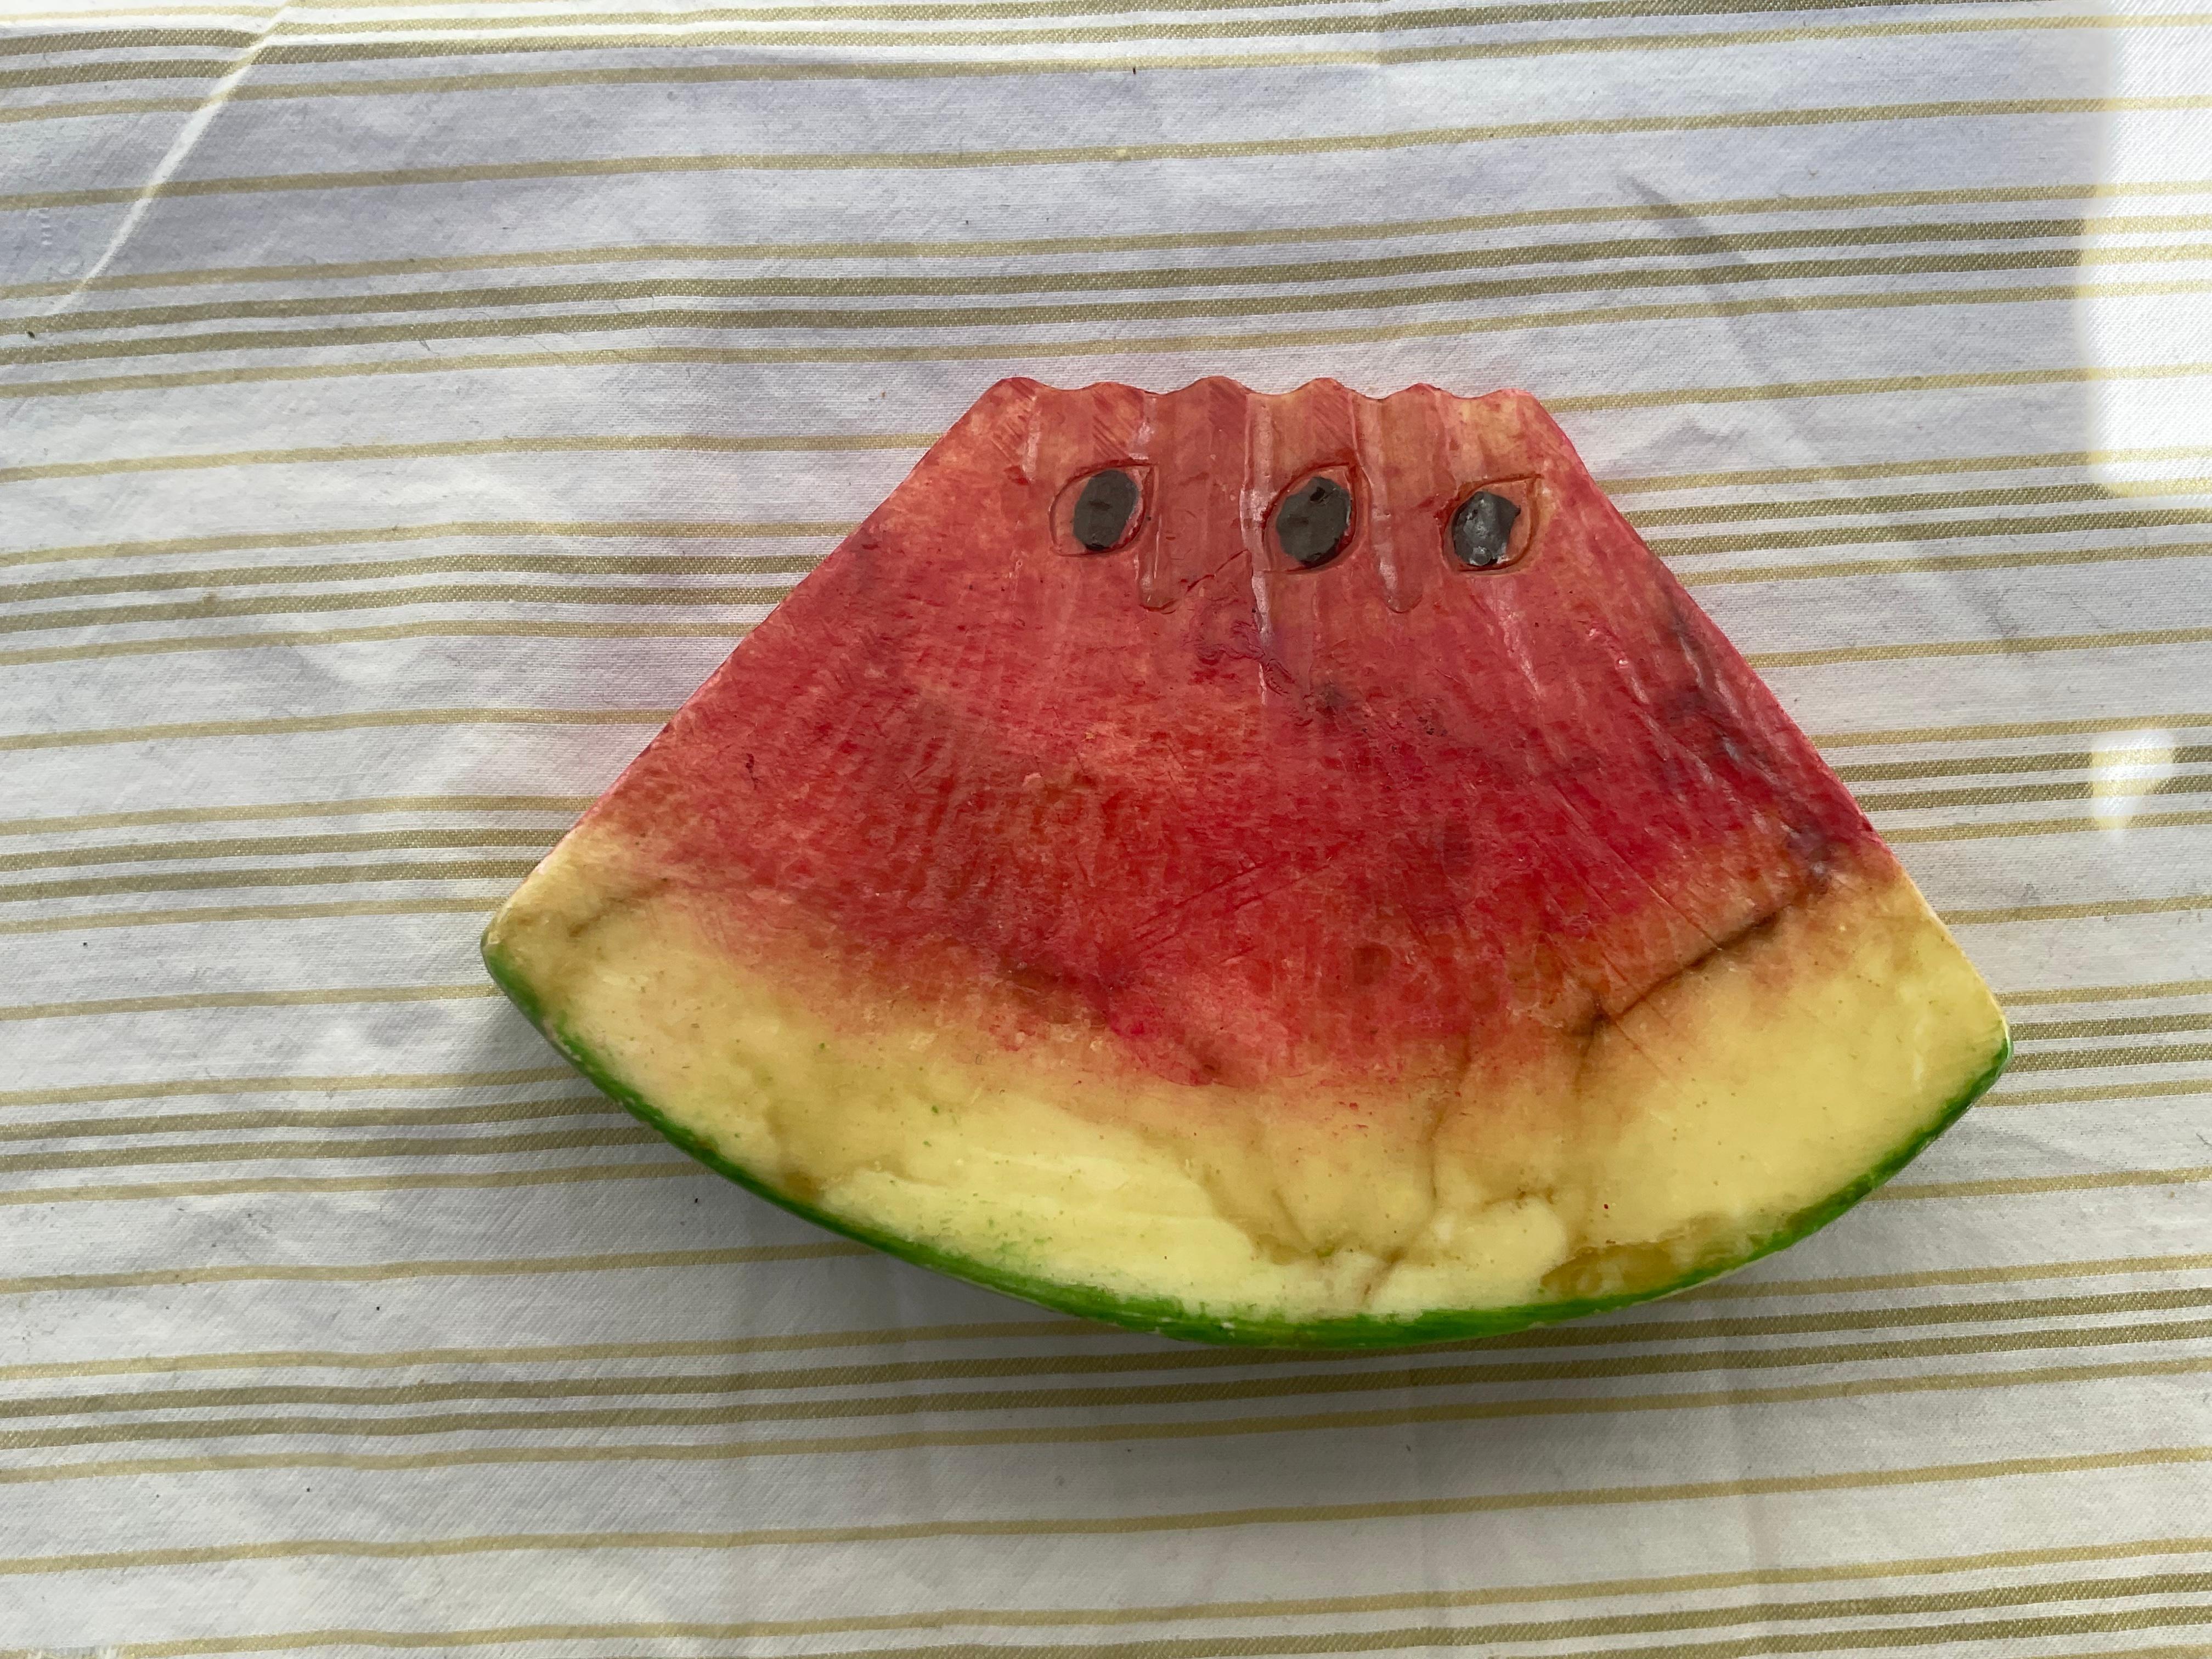 1960s Italian Stone Fruit, Watermelon Slices, 3 4